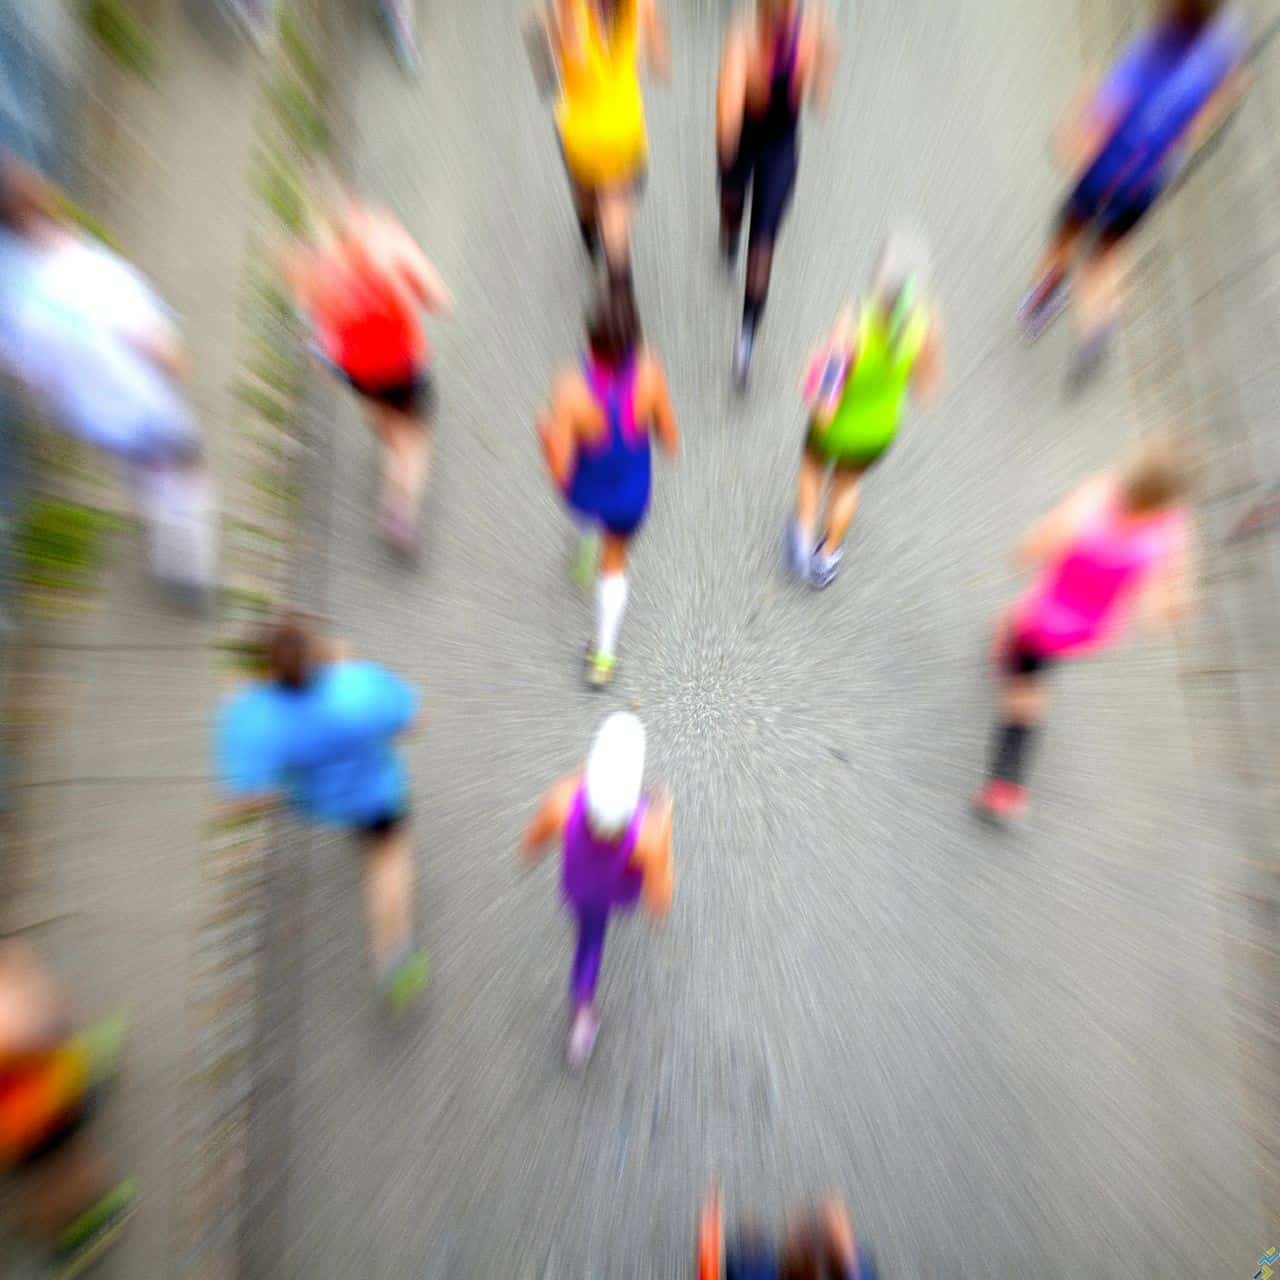 Running, populaire mais pas banal